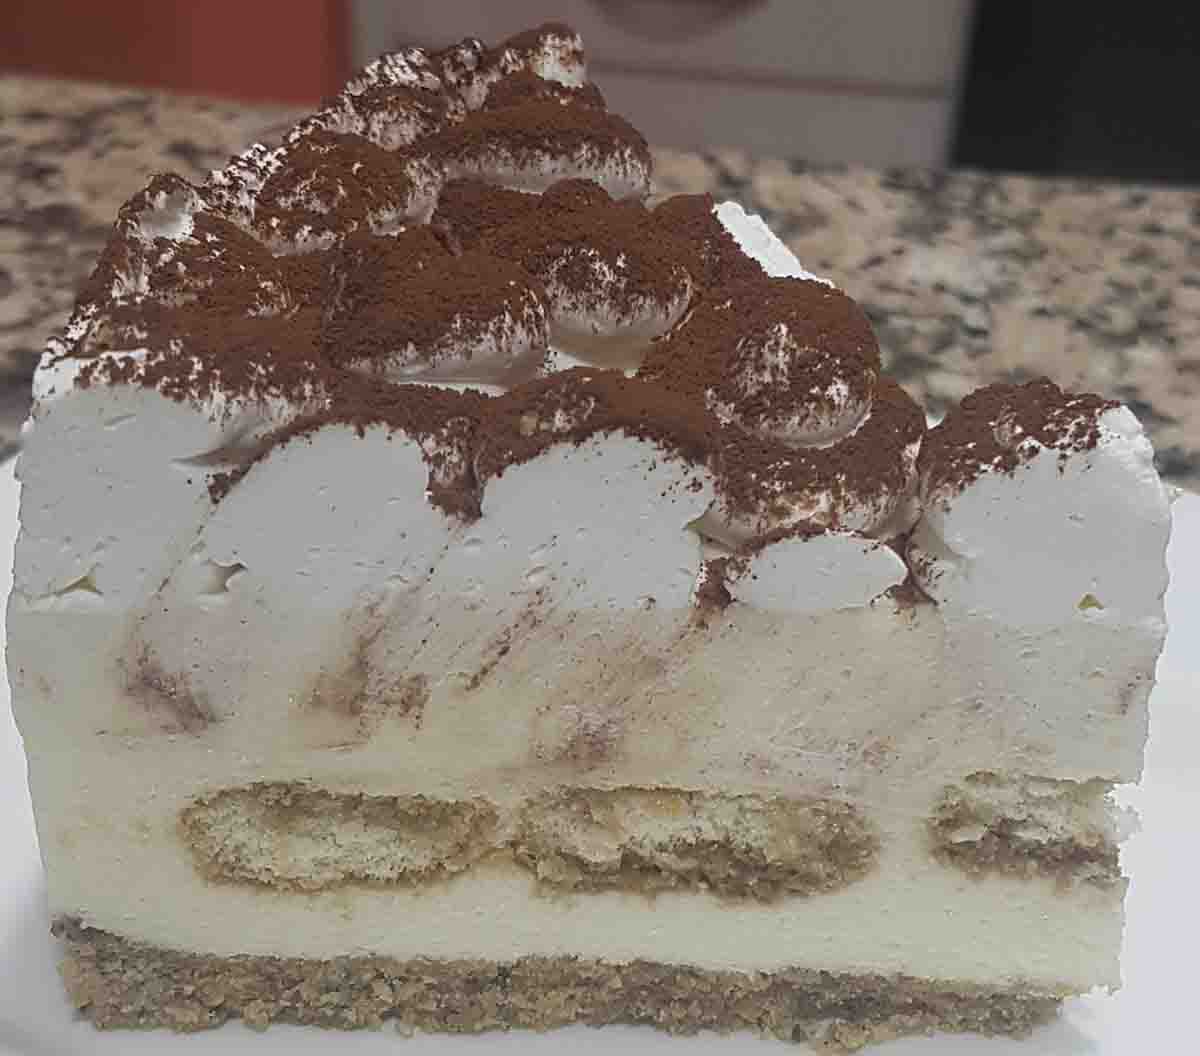 tarta tiramisu de chocolate blanco con thermomix